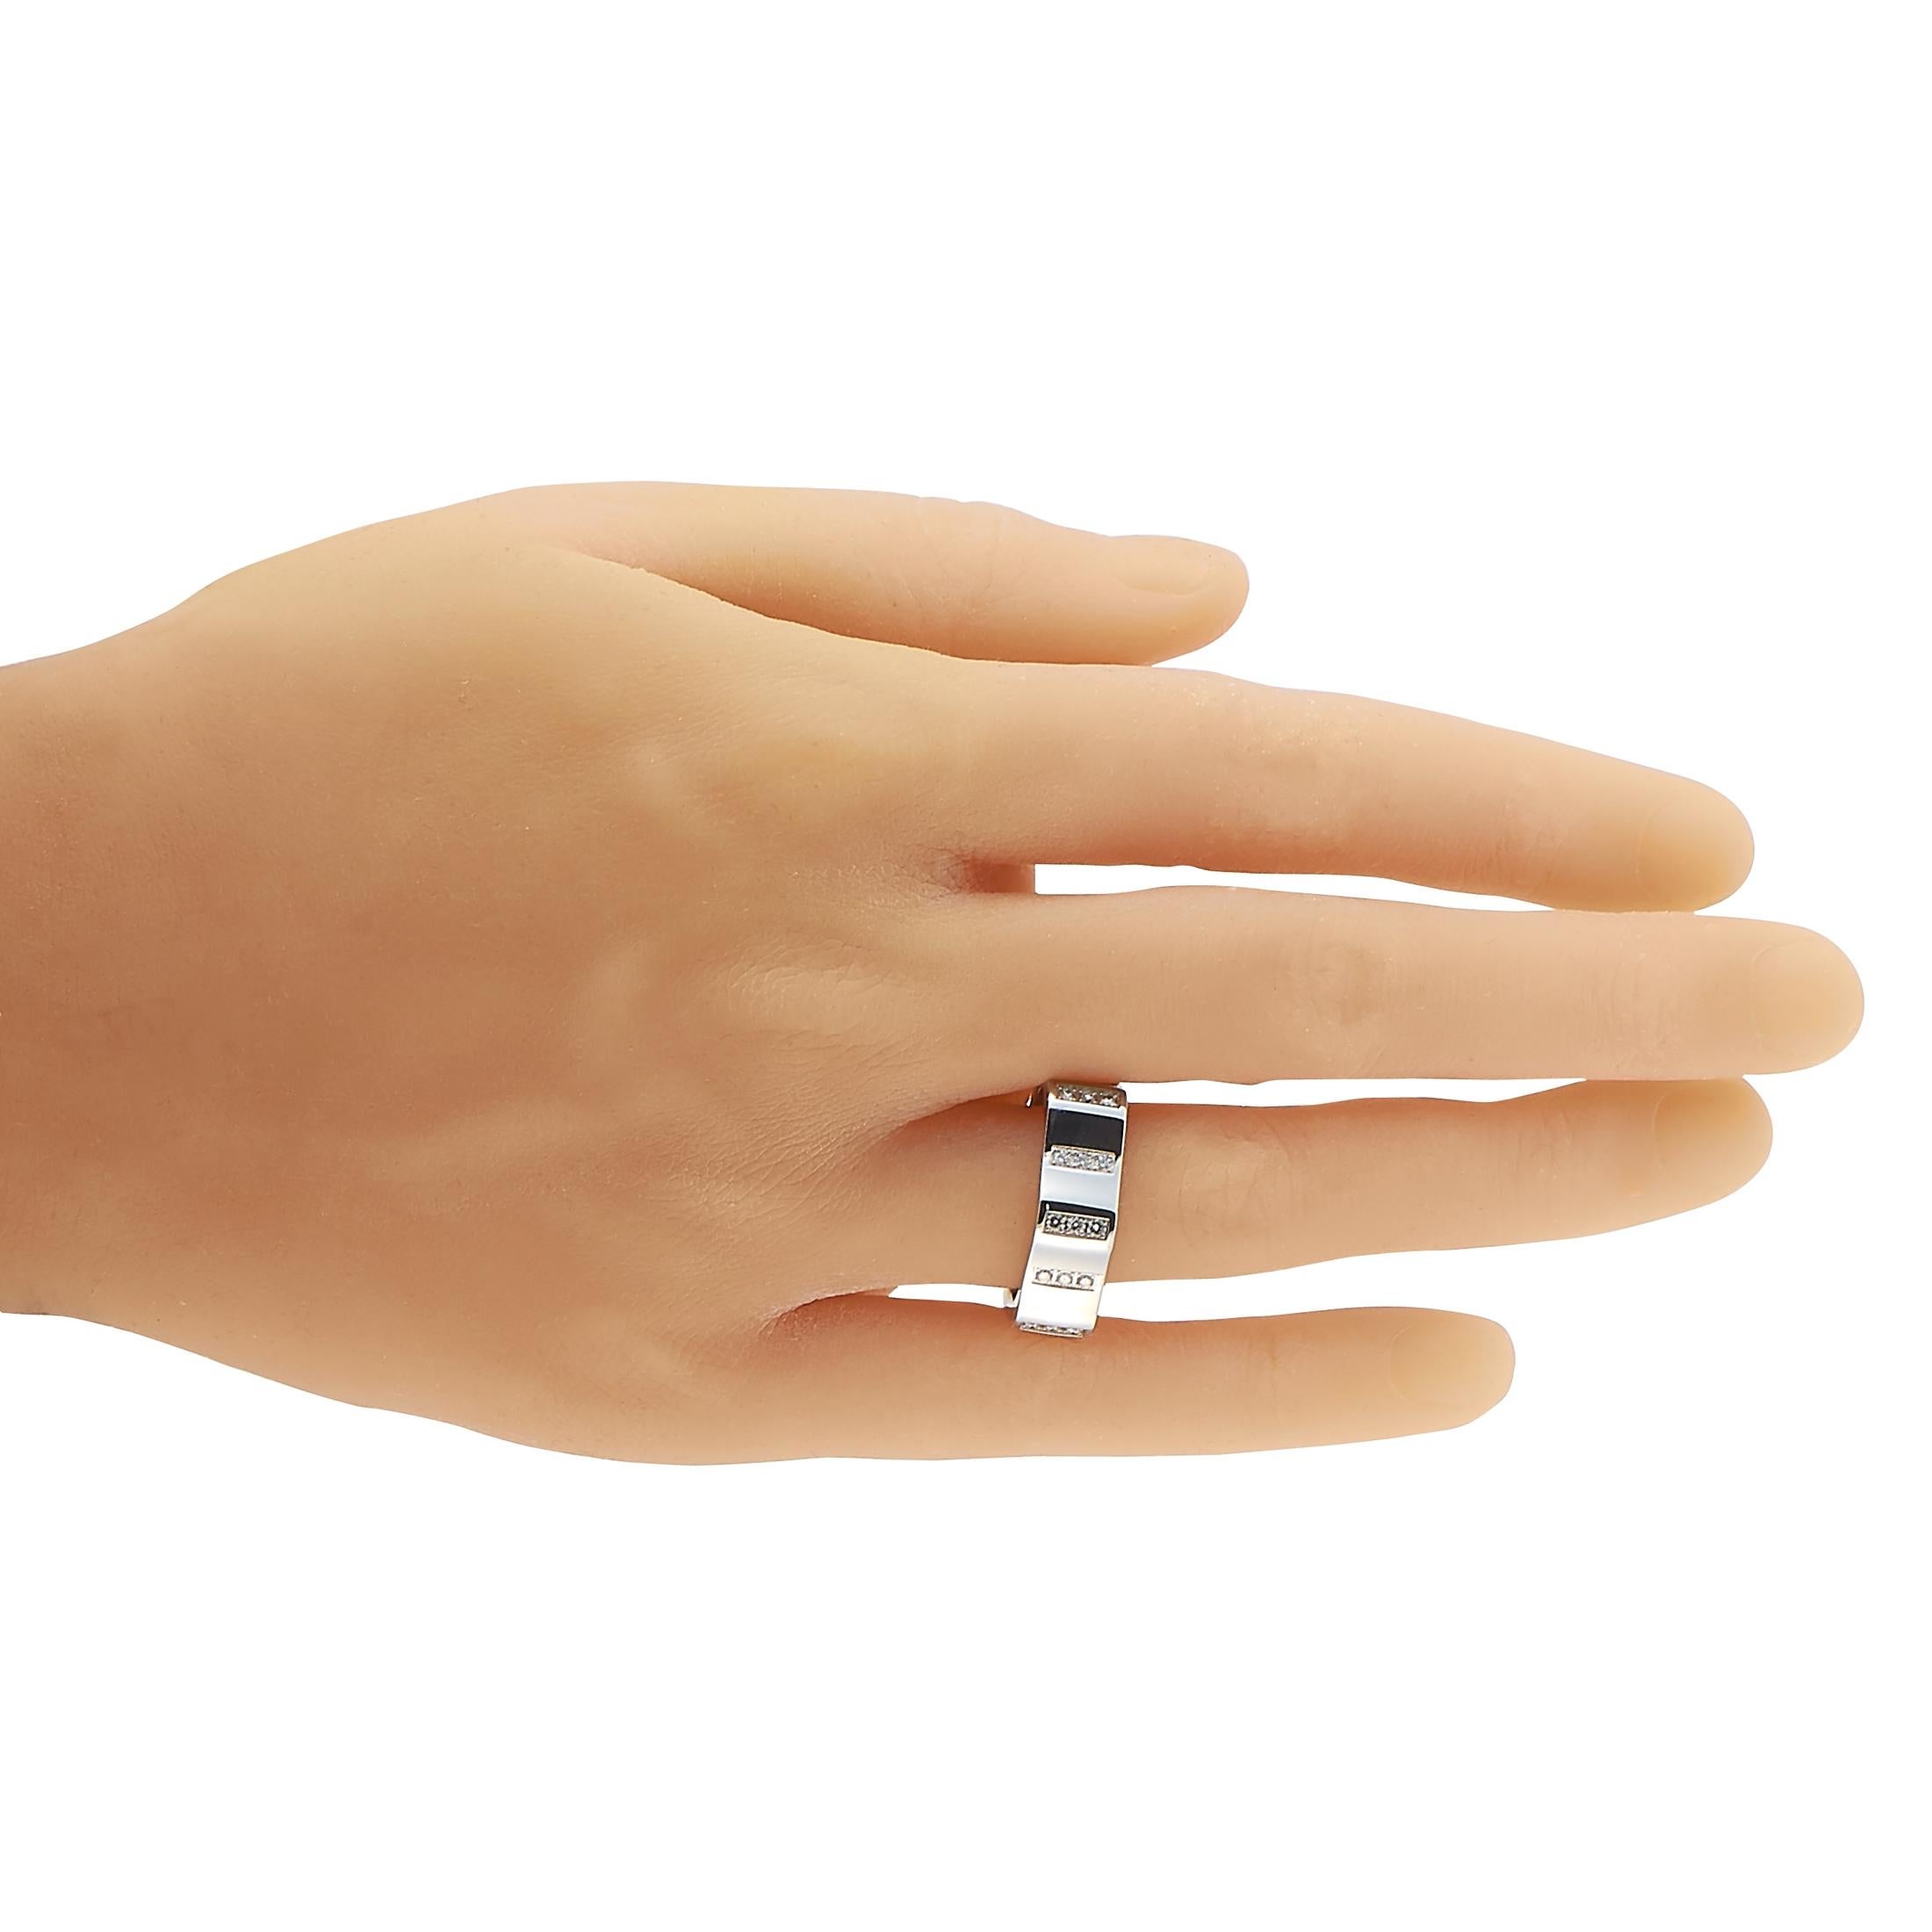 montblanc ring for ladies